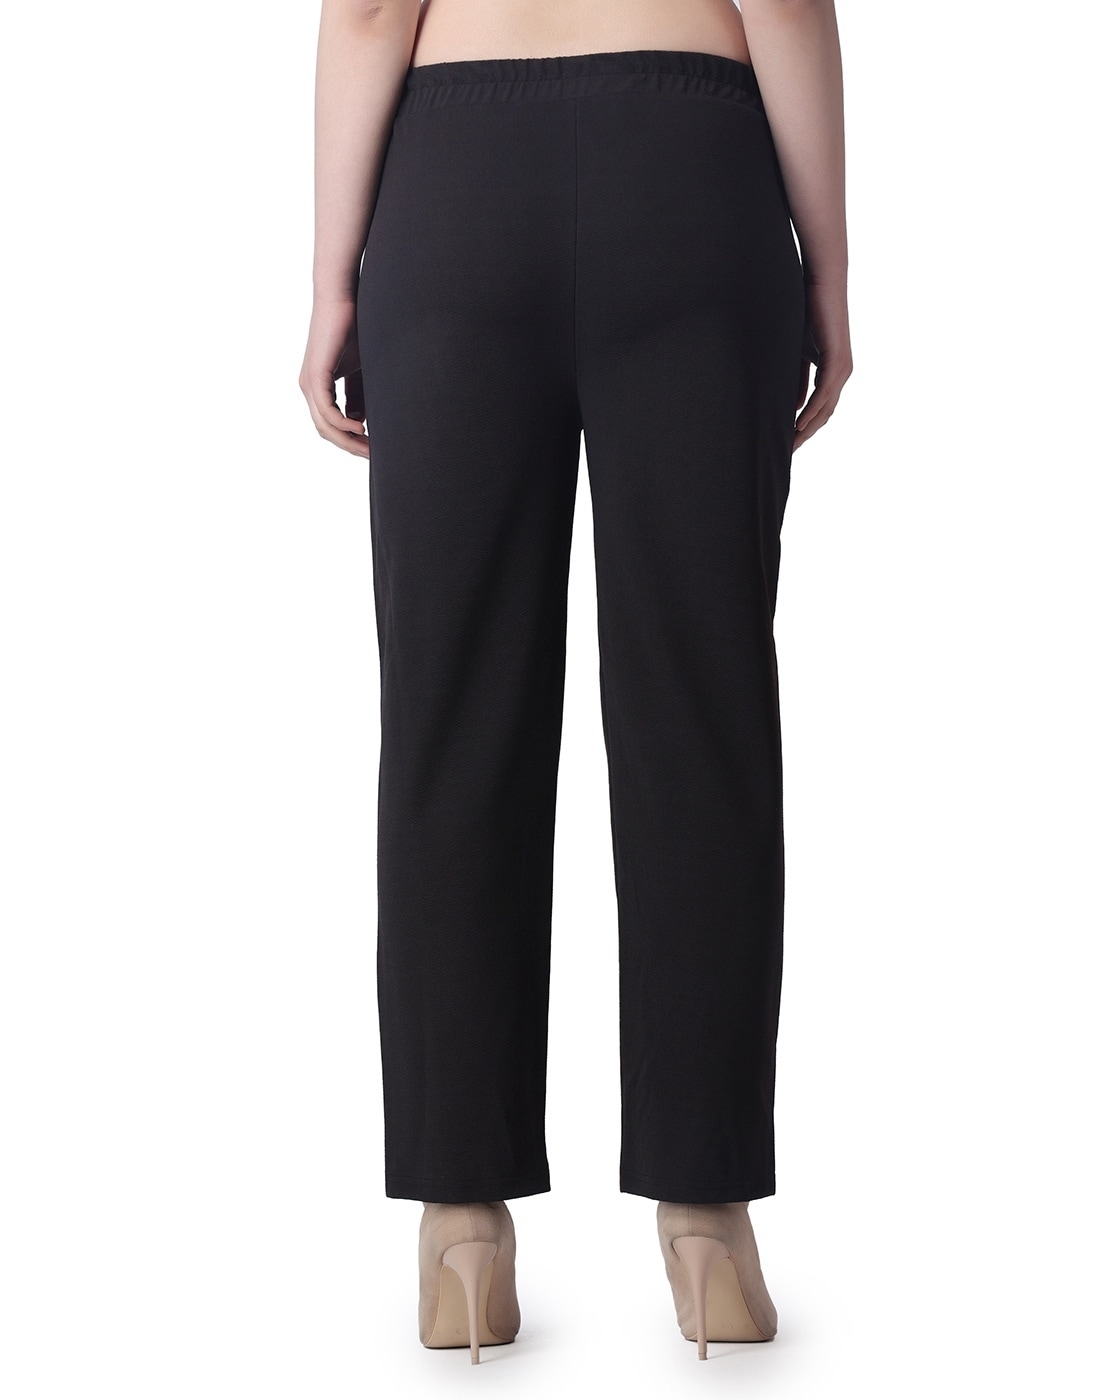 Buy Black Trousers & Pants for Women by POPWINGS Online